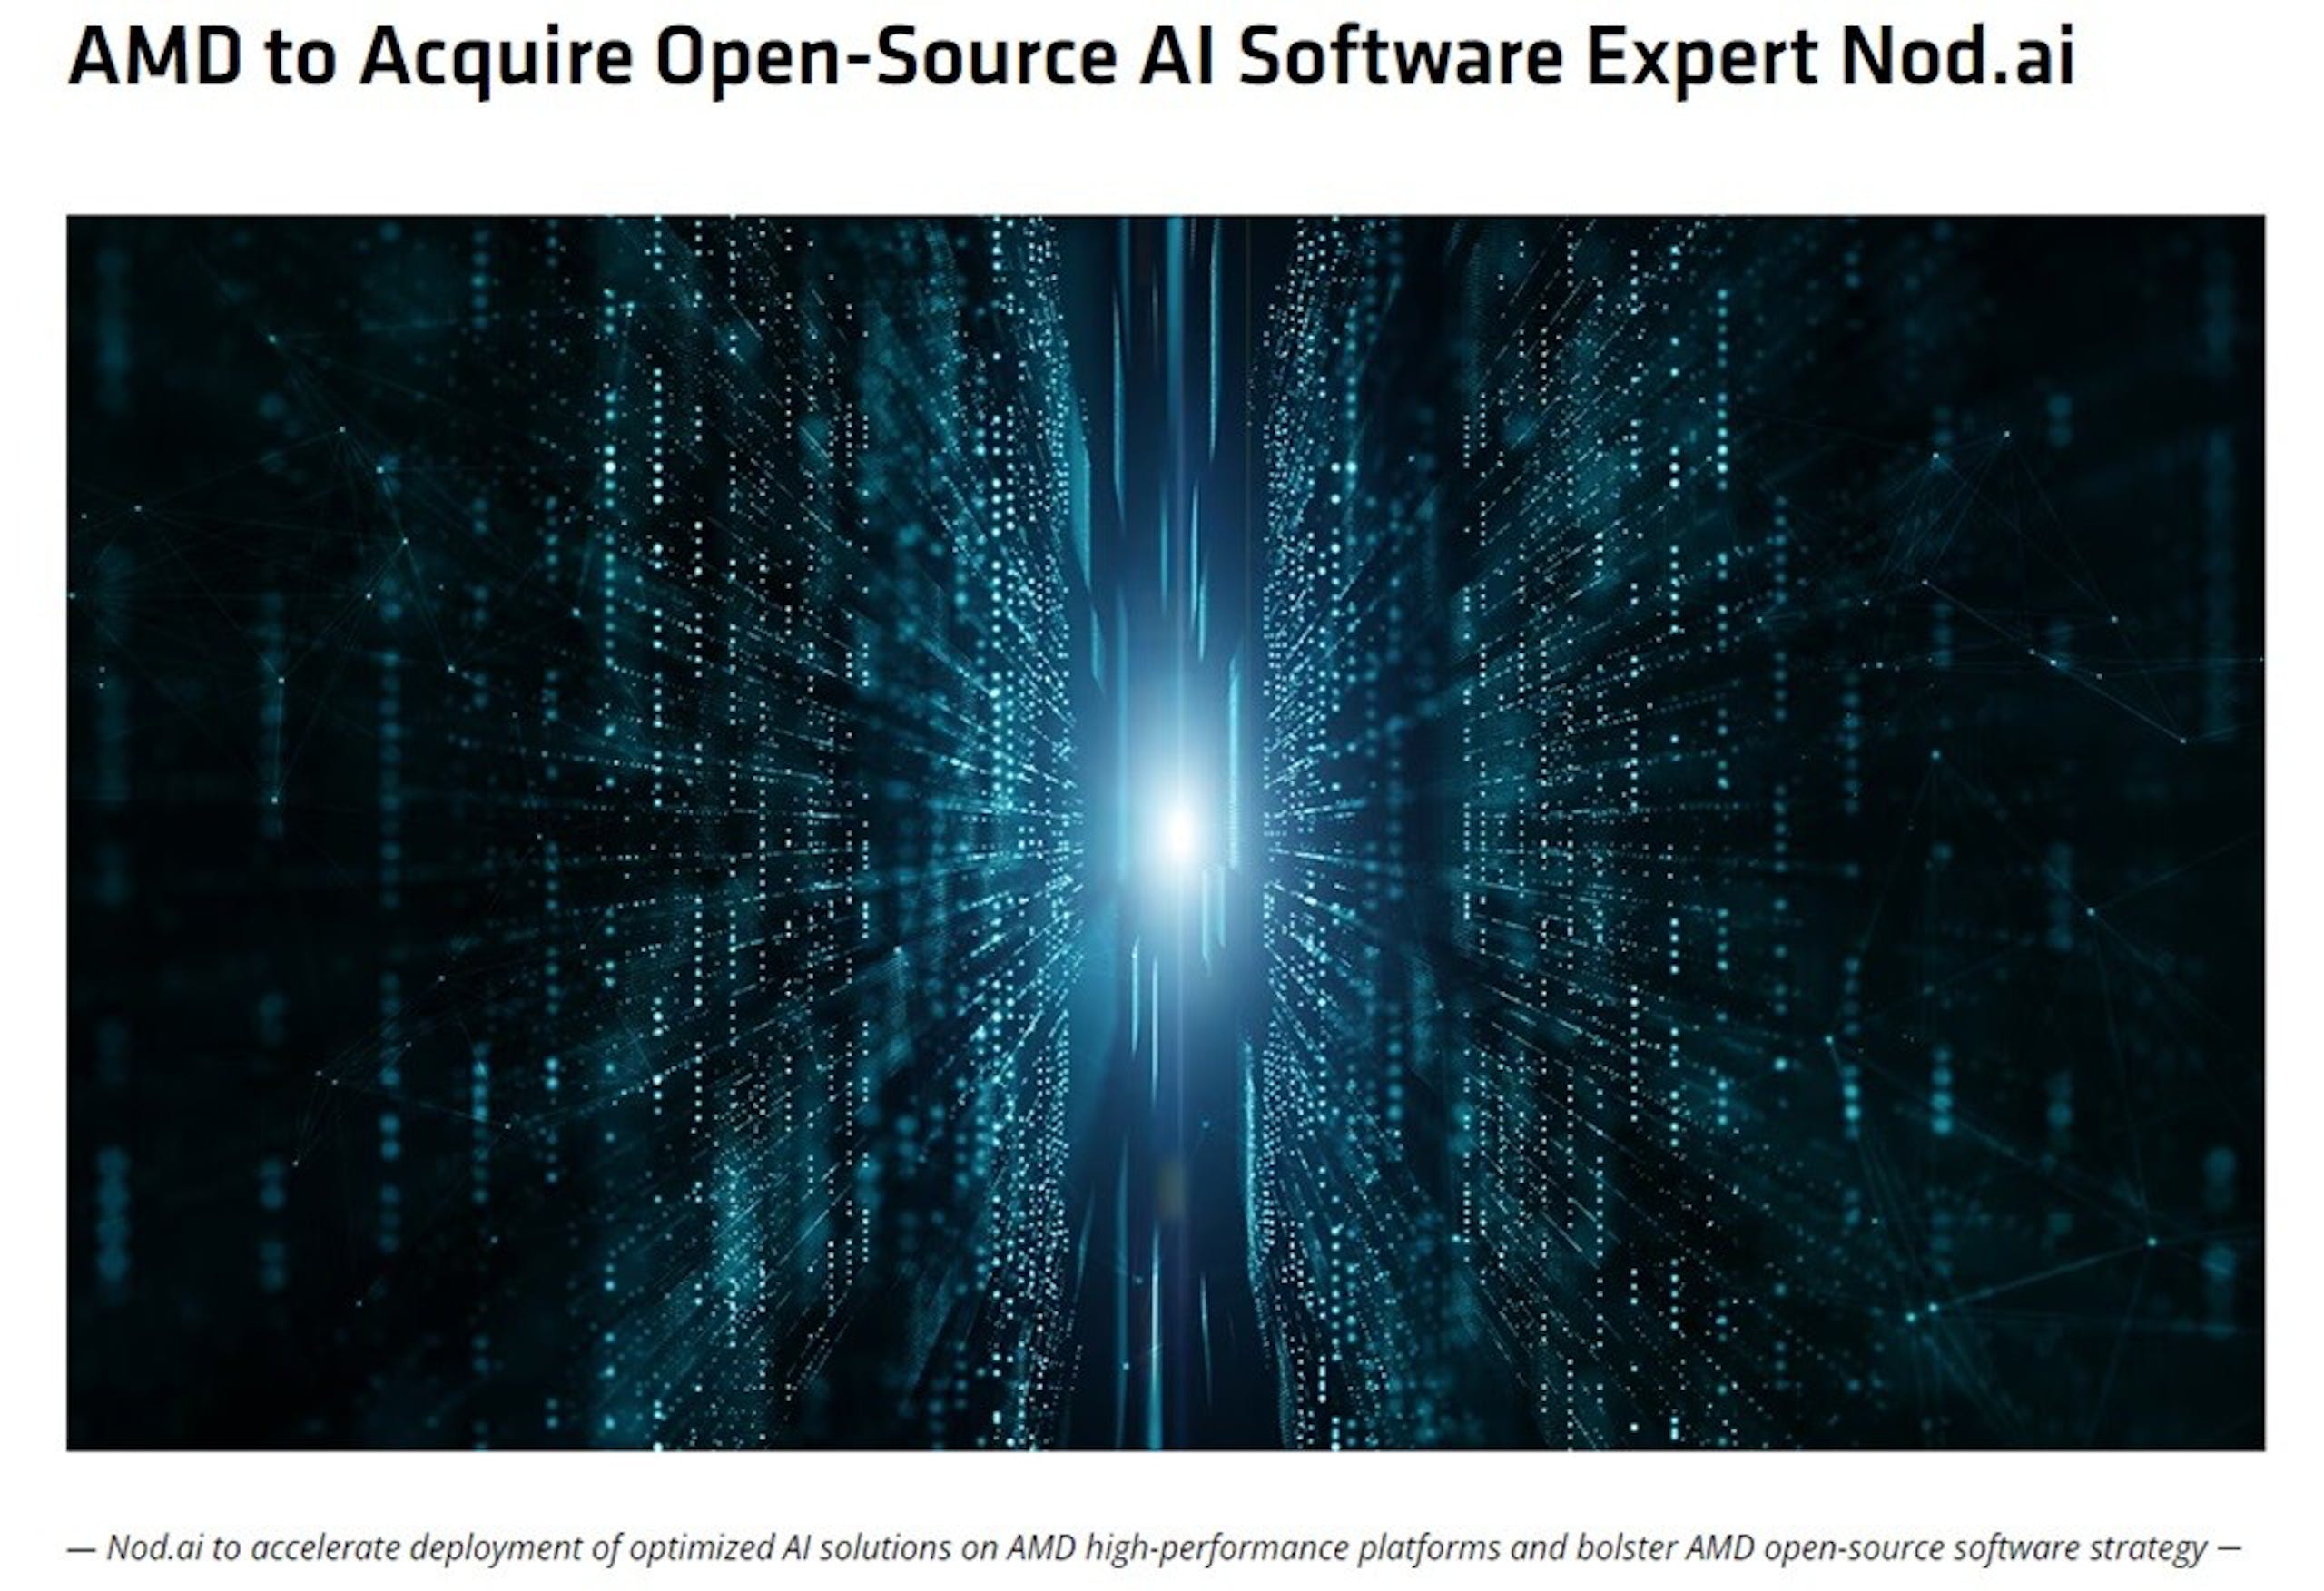 AMD宣布收购开源 AI 软件公司 Nod.ai